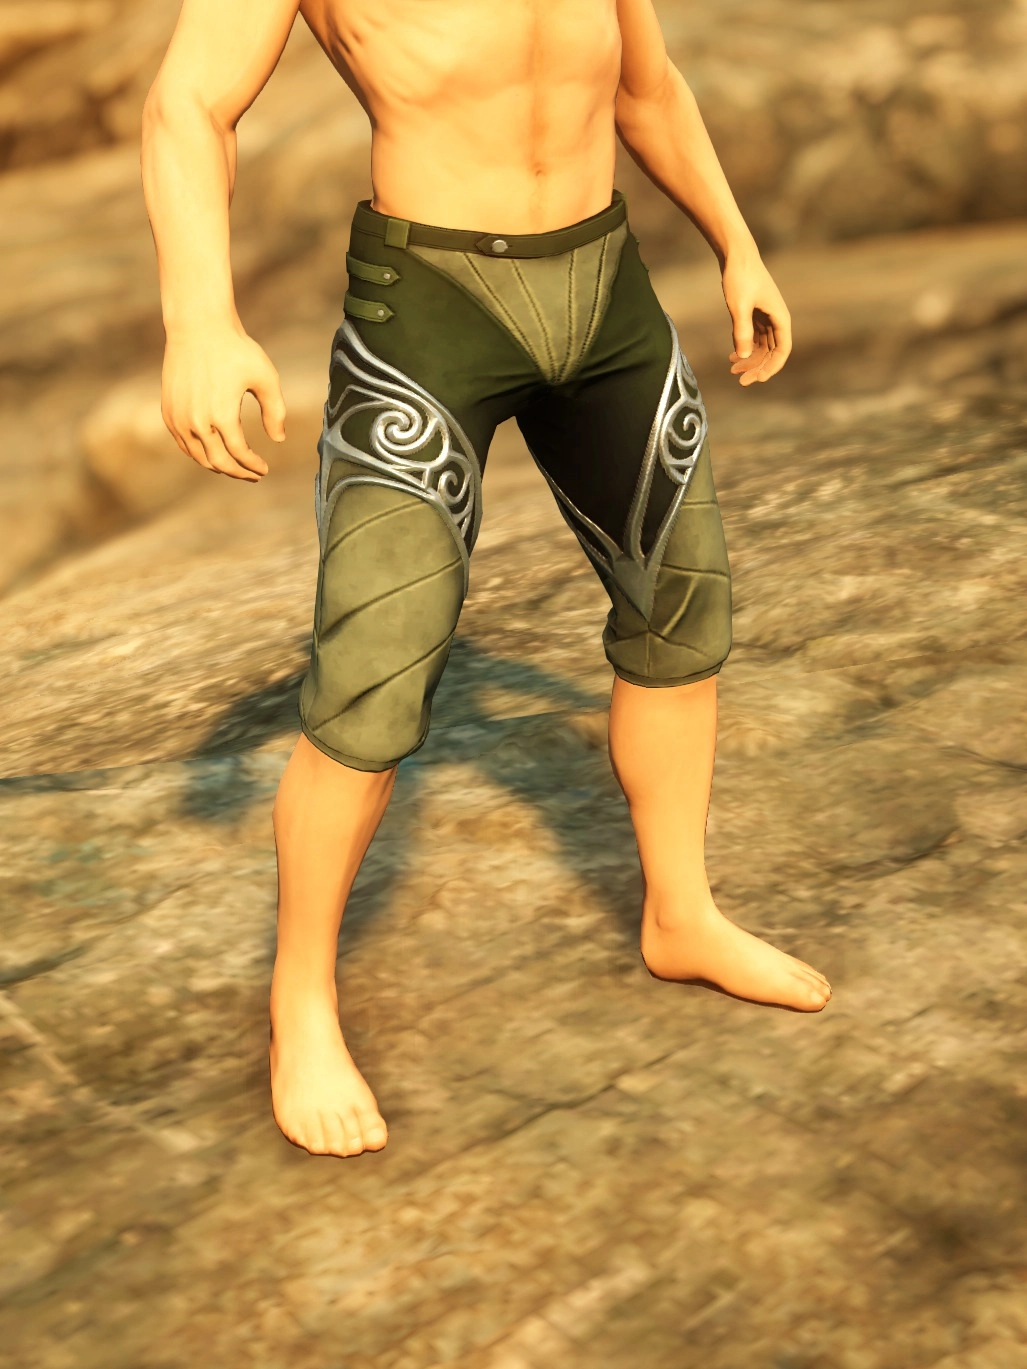 Overgrown Pants of the Ranger